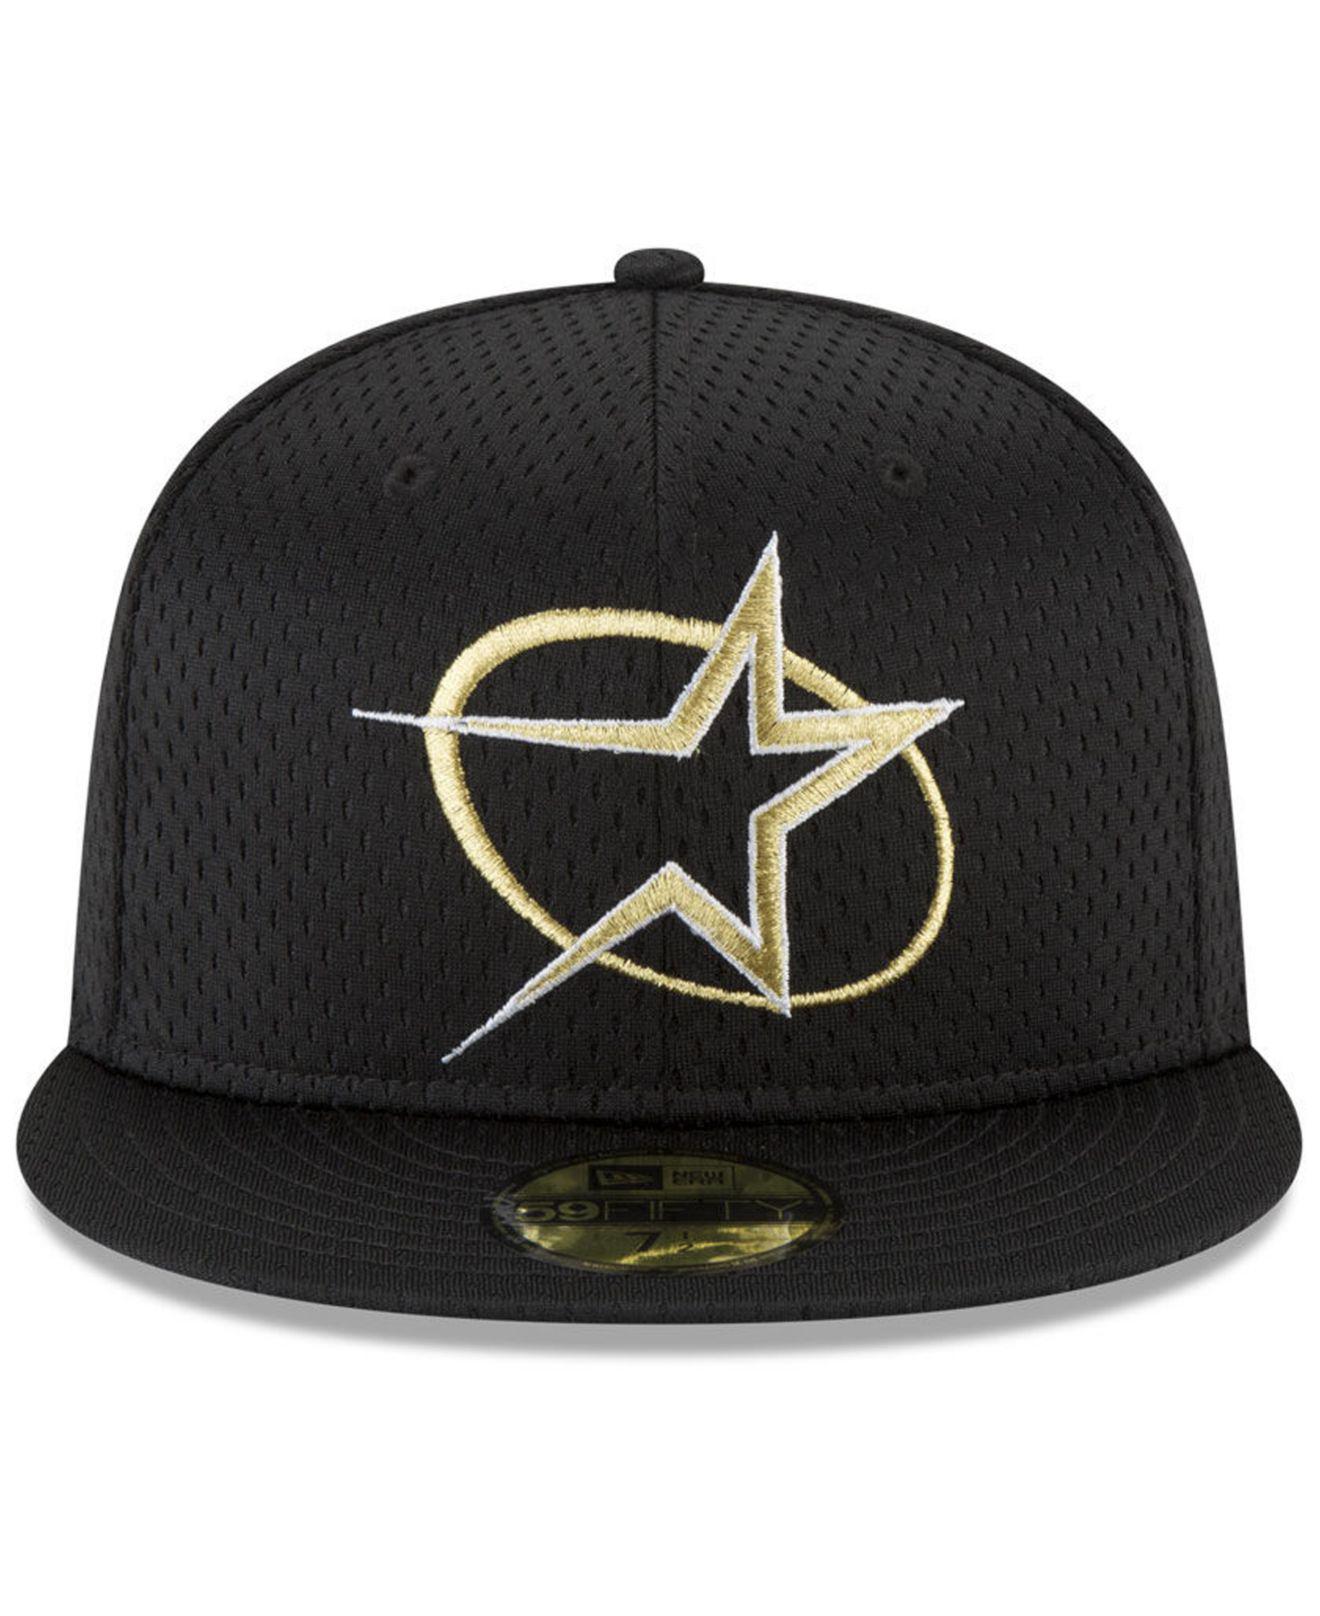 astros 90s hat